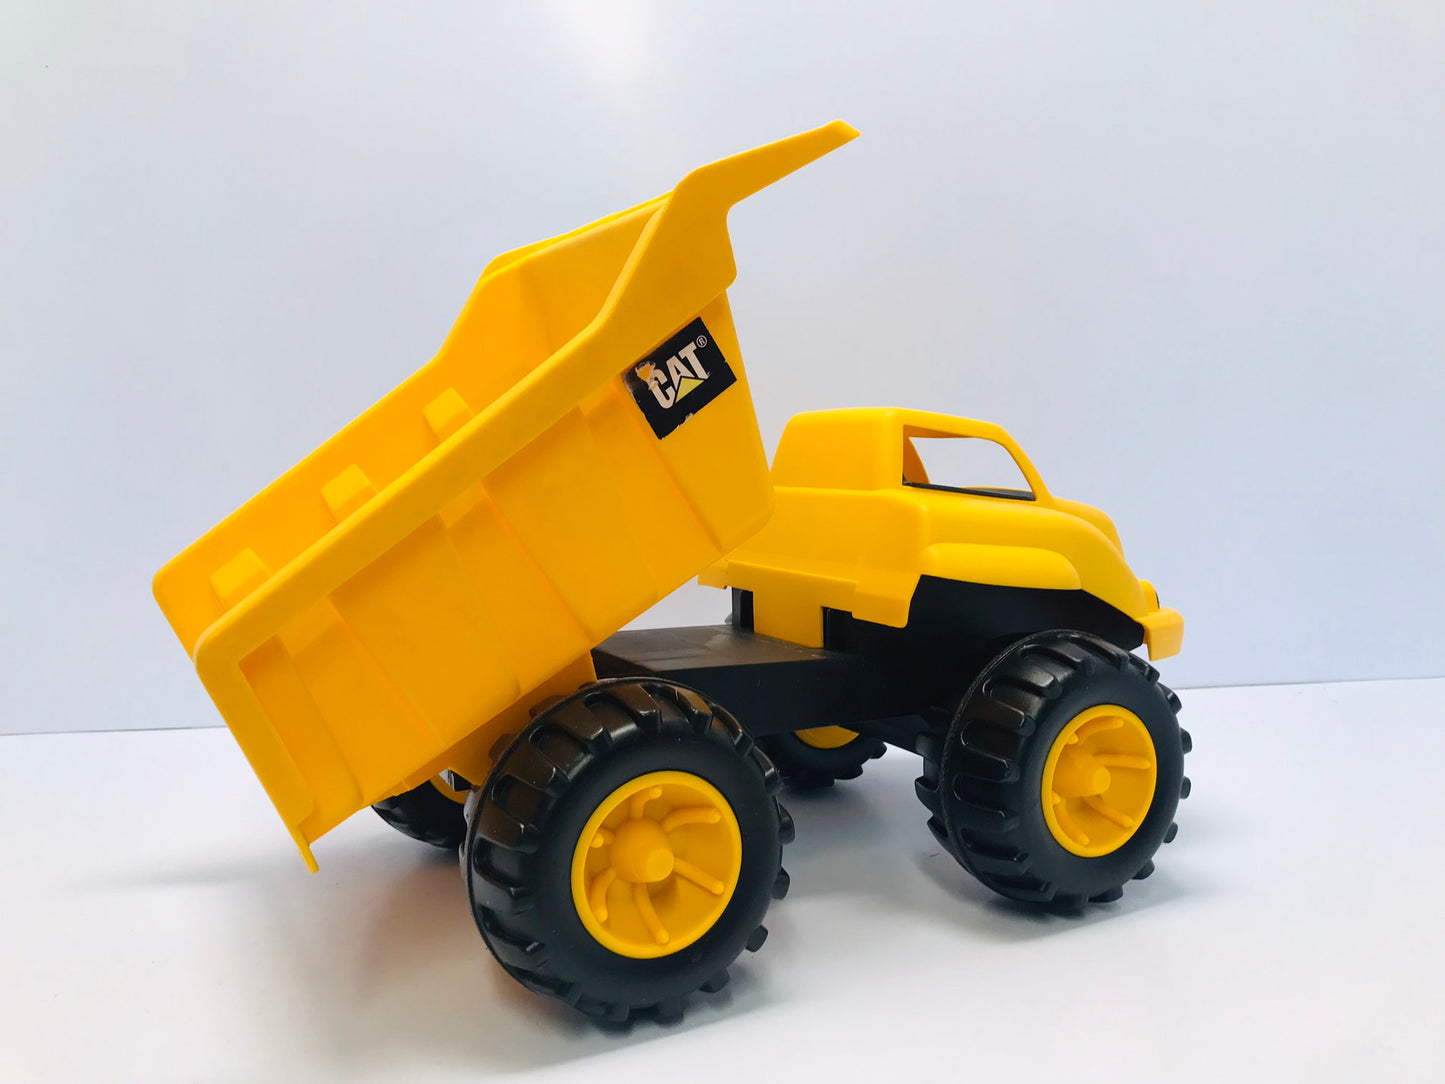 Cat Sandbox Toy Rugged Big Dump Truck